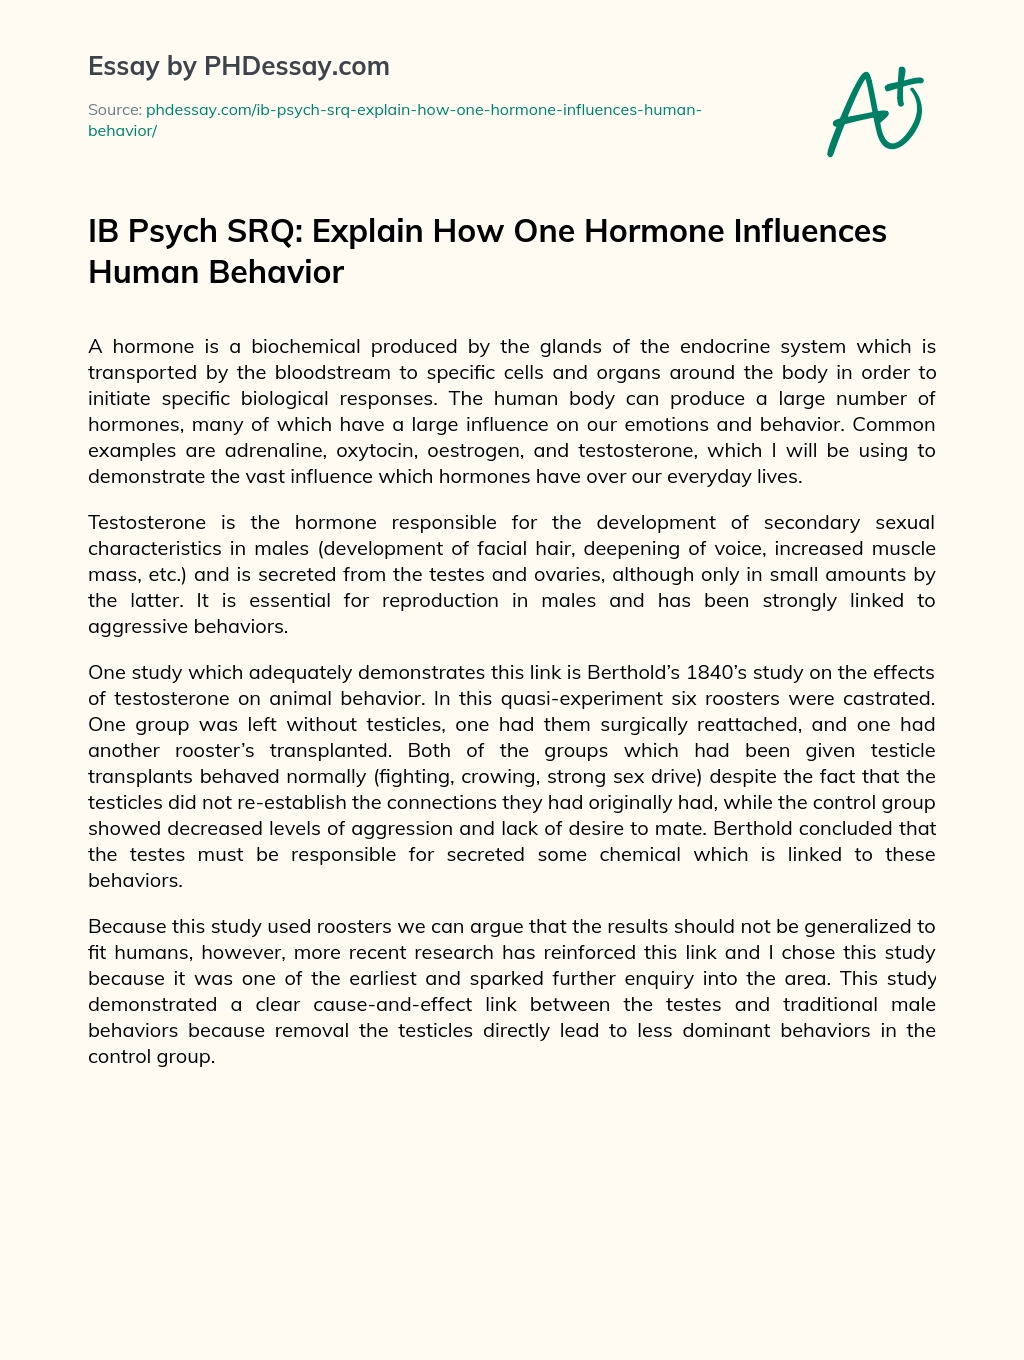 IB Psych SRQ: Explain How One Hormone Influences Human Behavior essay